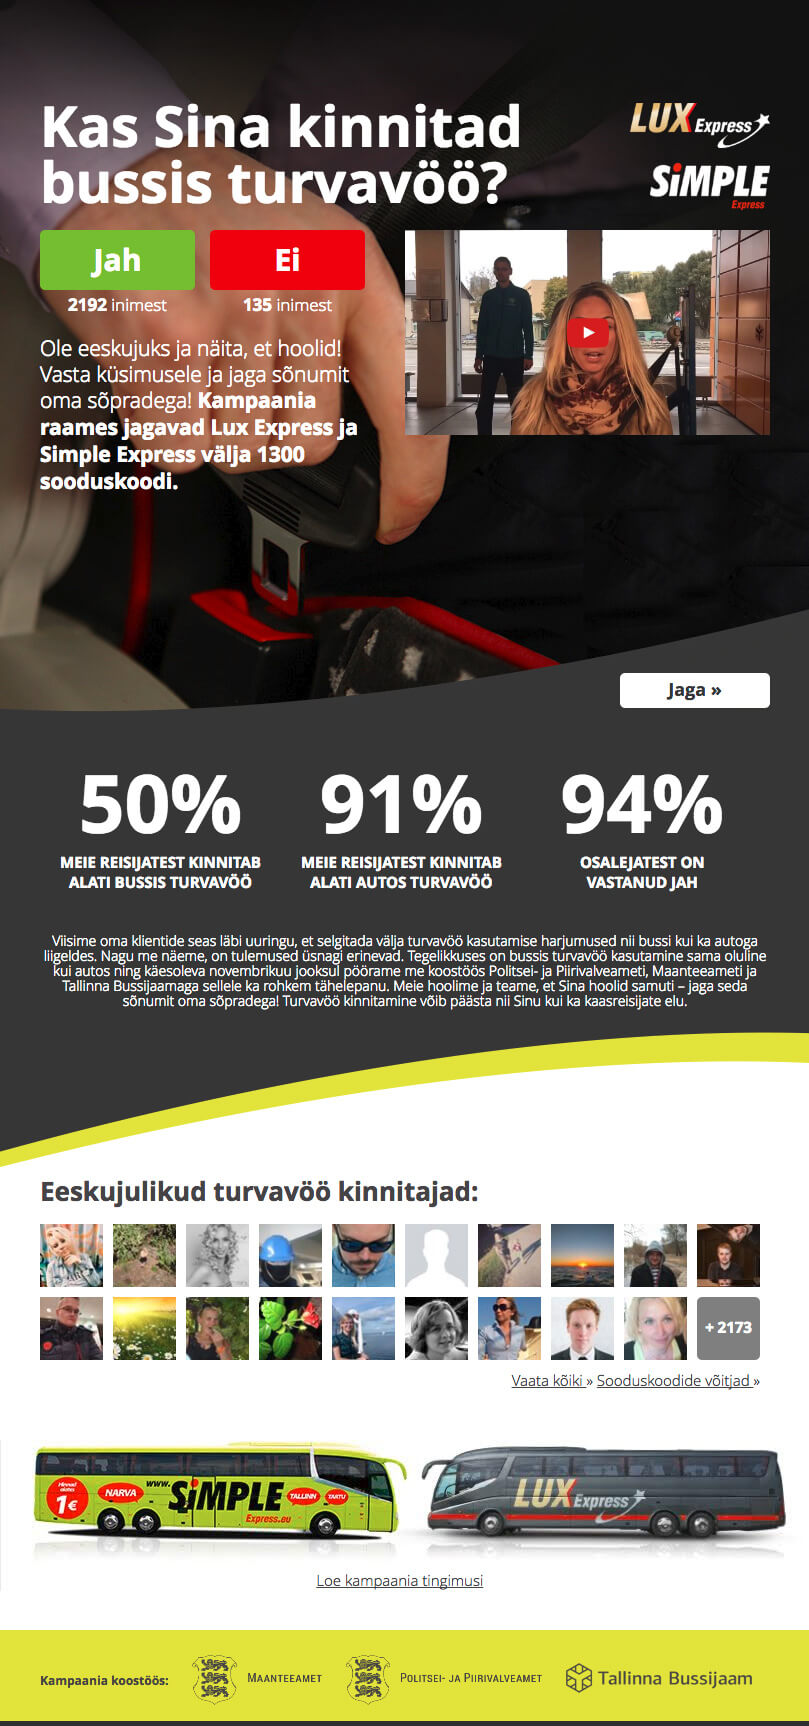 Kinnita bussis turvavöö!” awareness campaign in social media